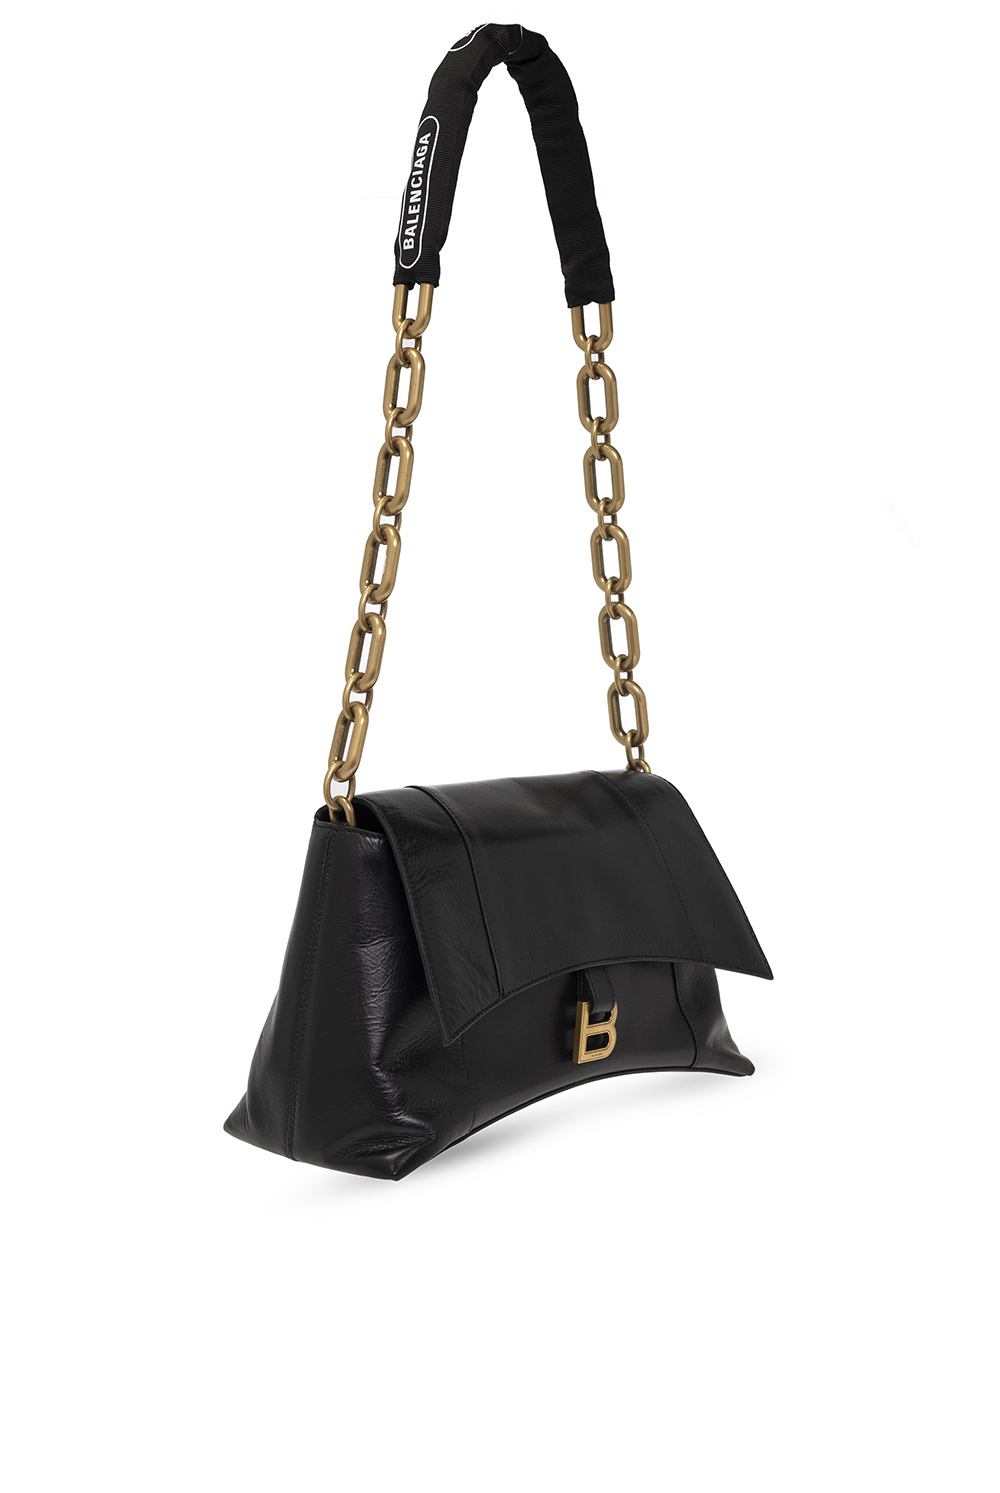 Balenciaga Black Woven Straw and Leather Vintage Flap Shoulder Bag  Balenciaga | The Luxury Closet